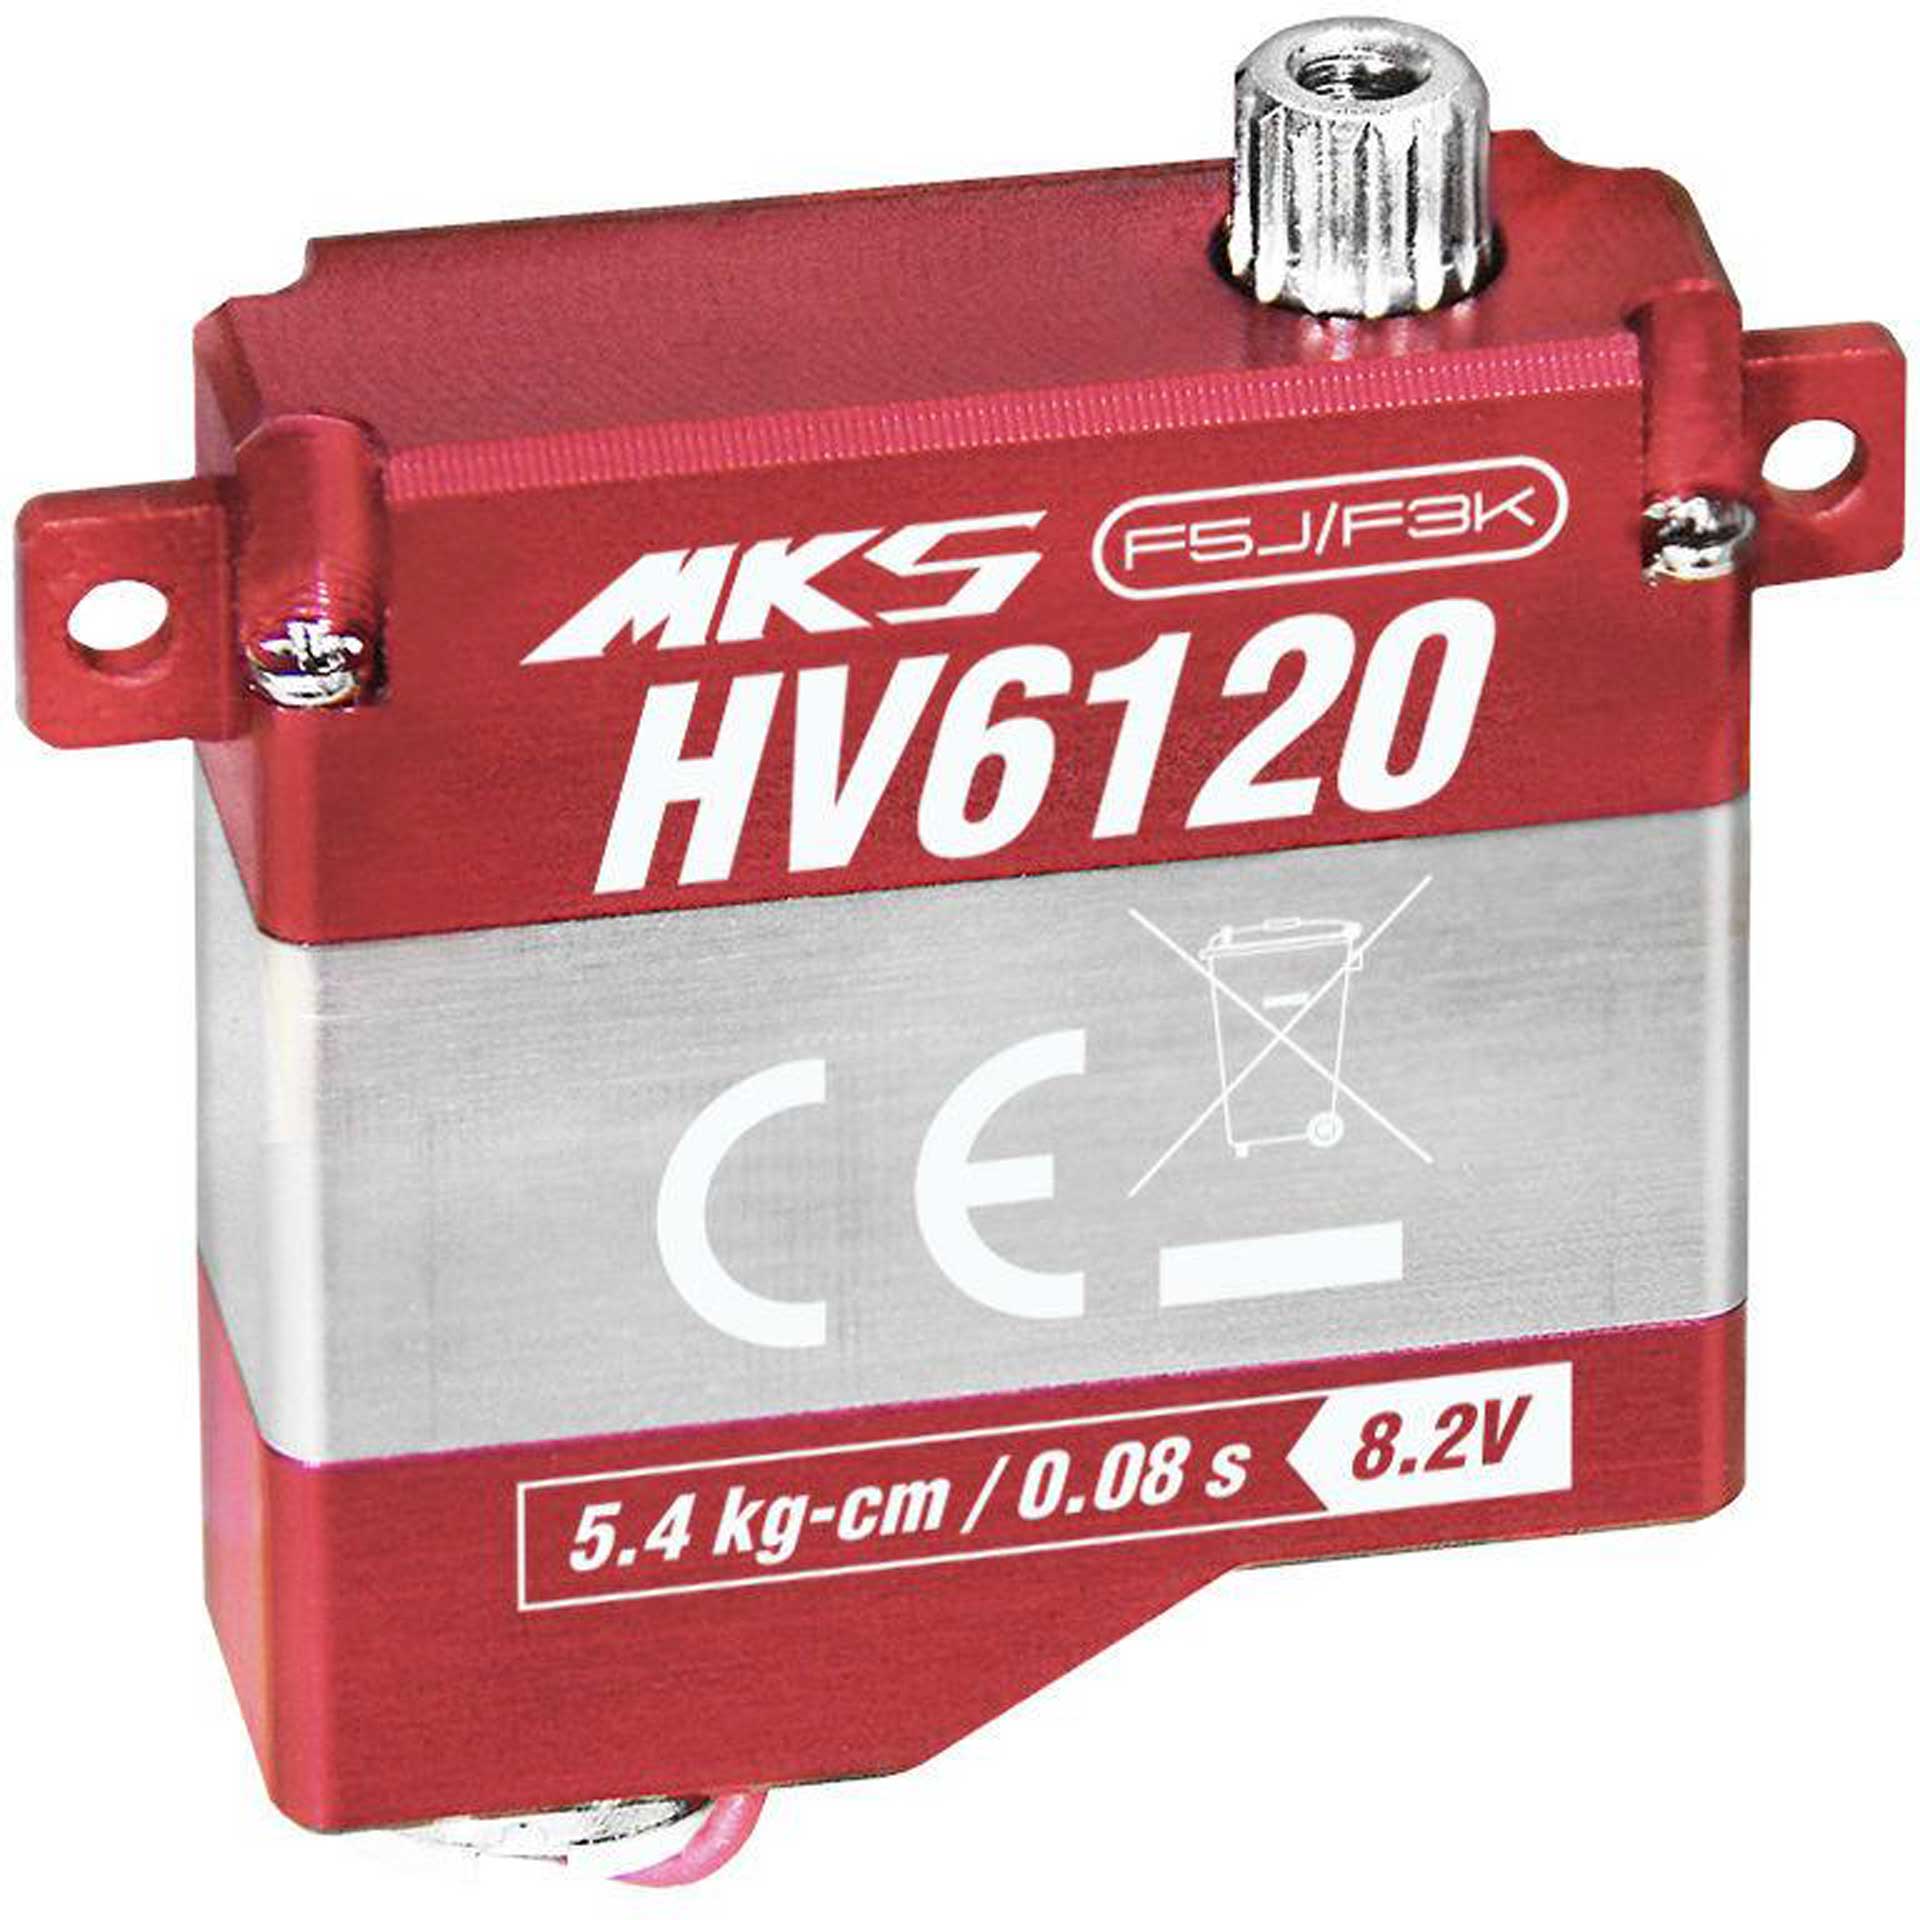 MKS HV6120 Digital Servo für F5J , F3K...... inkl. carbon Servorahmen